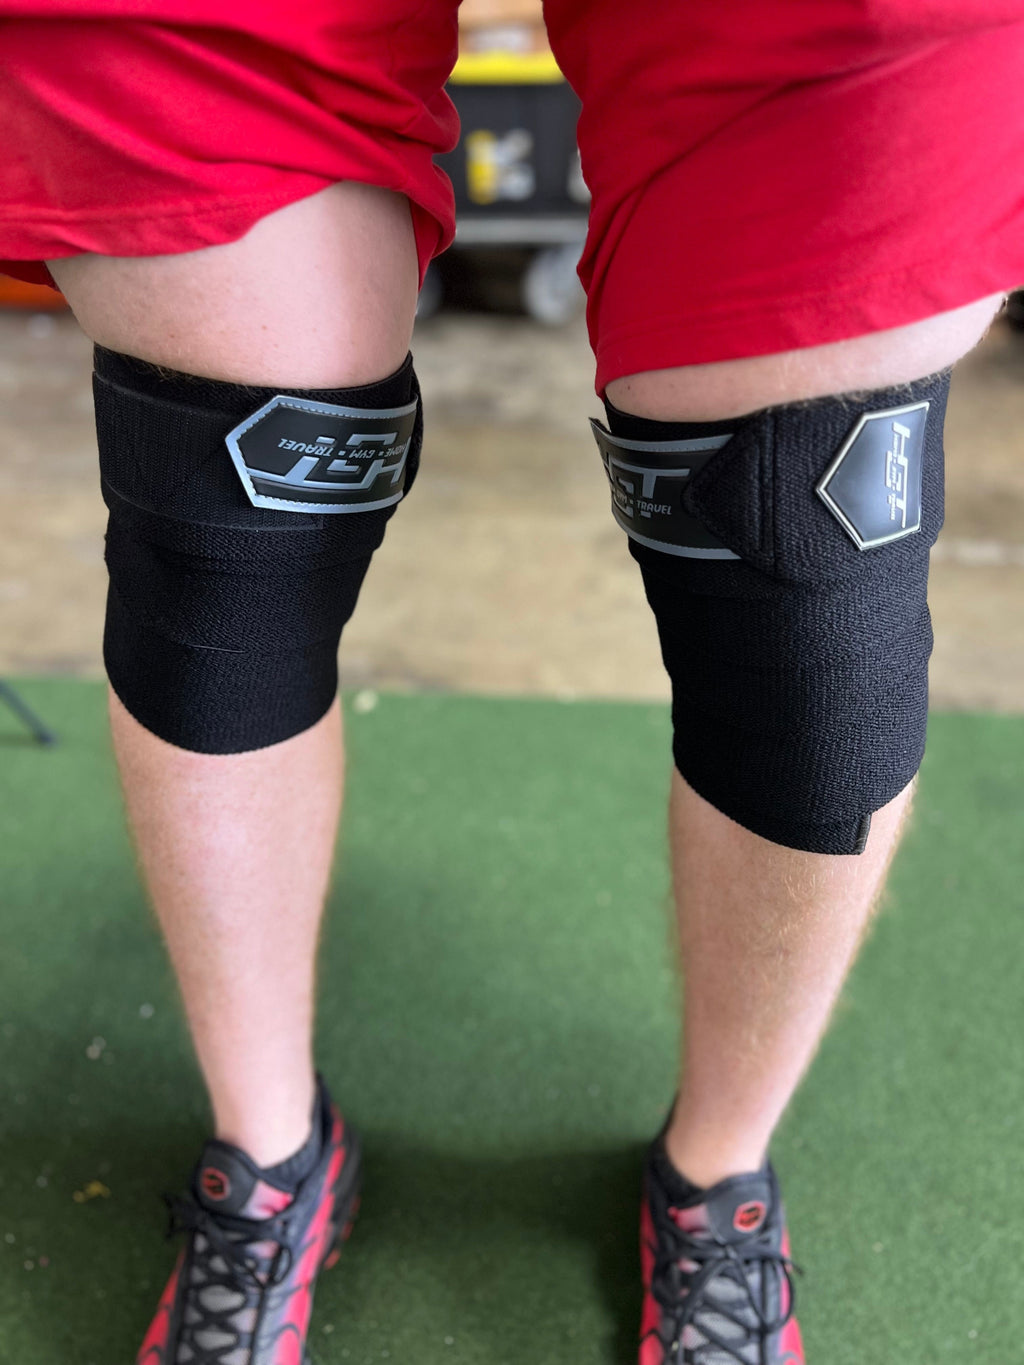 Knee Wraps with Heavy Duty Velcro Strap